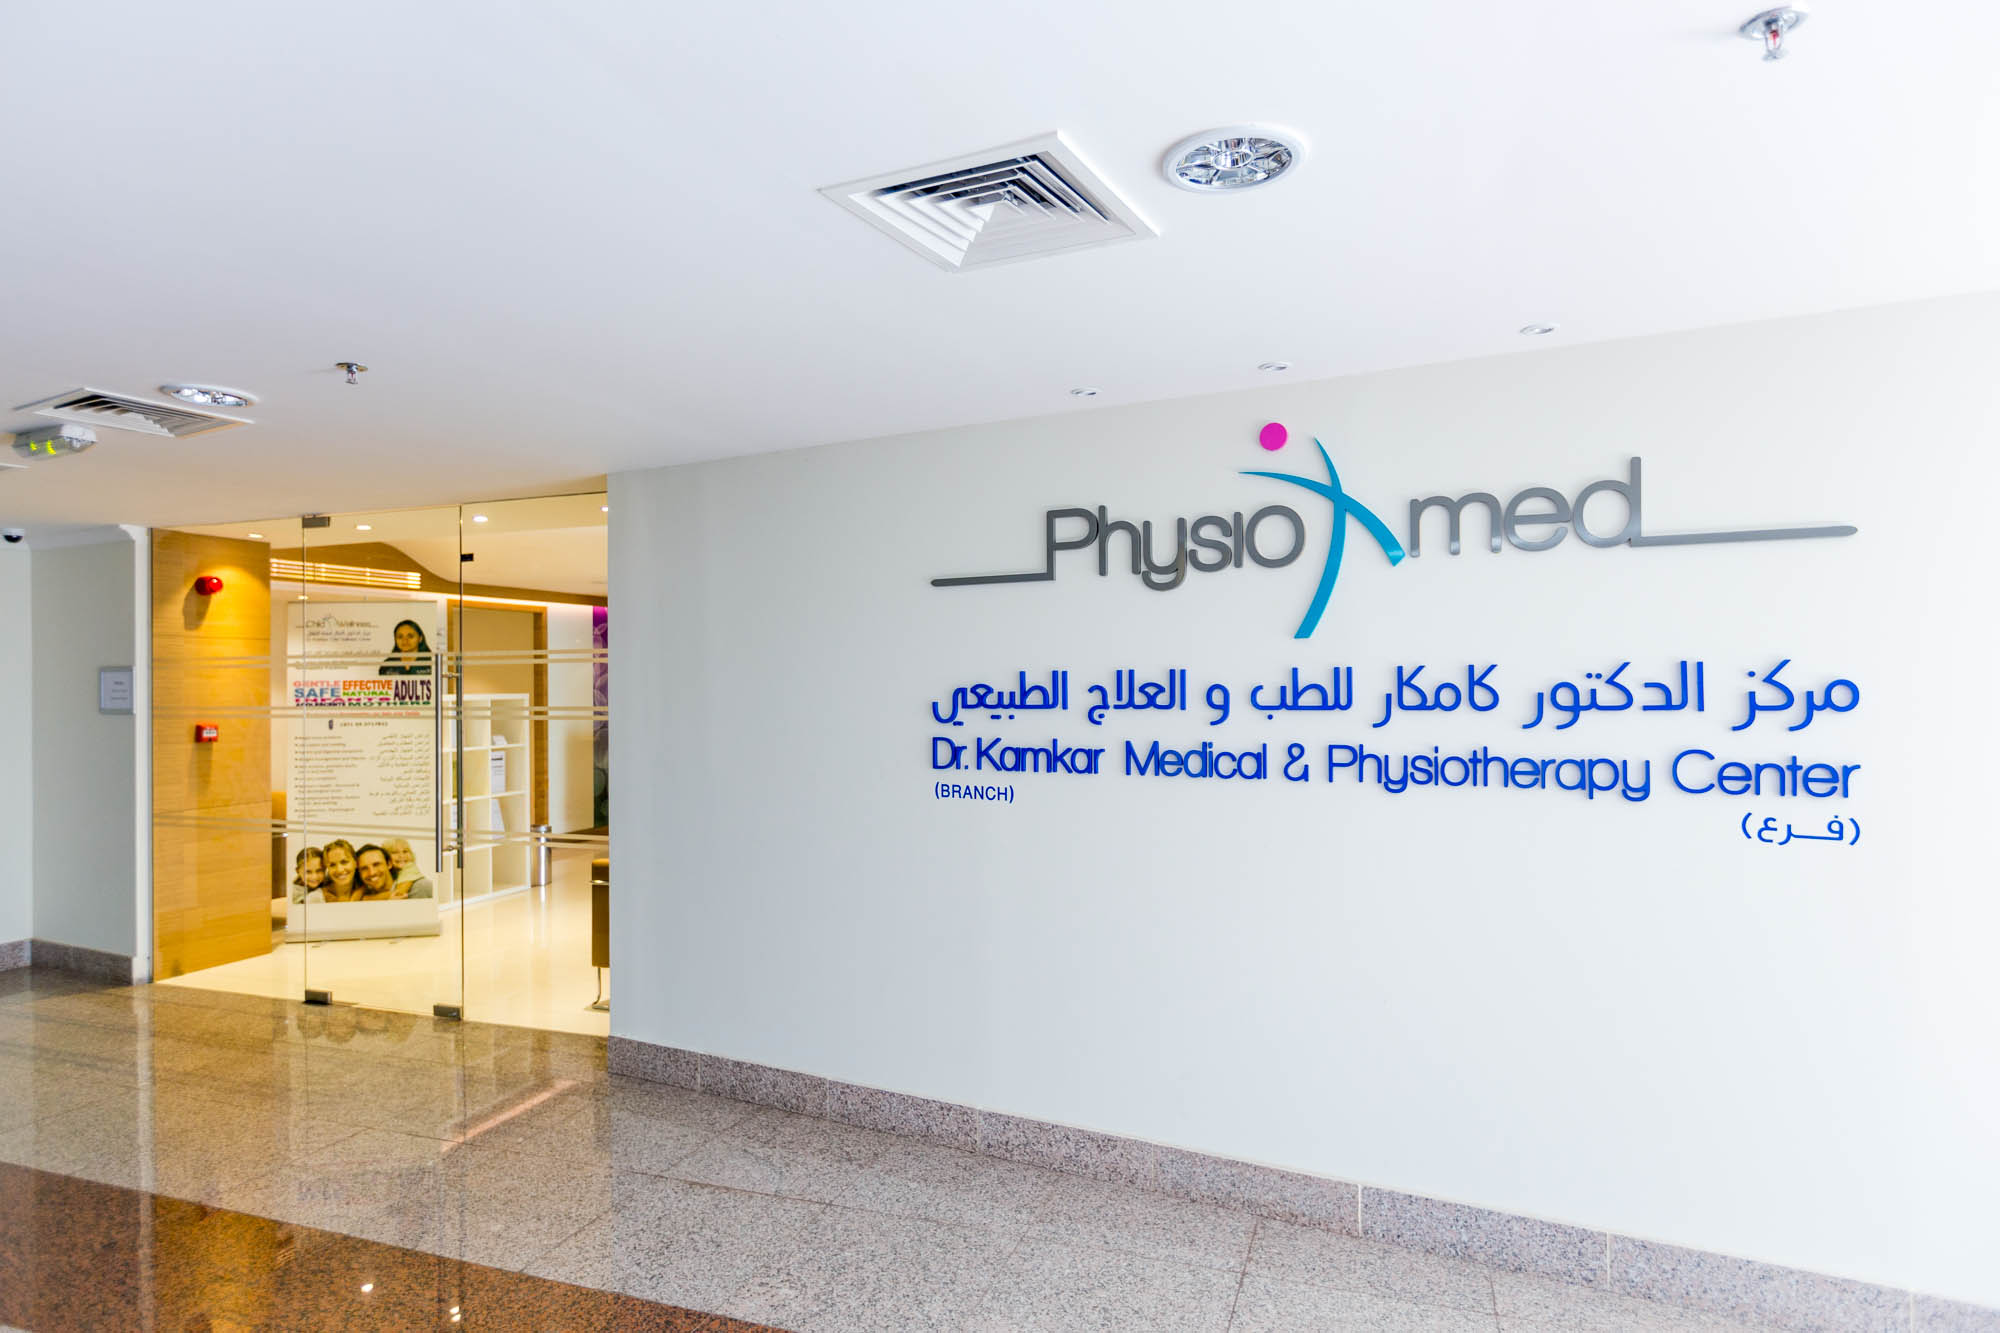 DR. Kamkar Medical & Physiotherapy center- Dubai (Clinic Review)